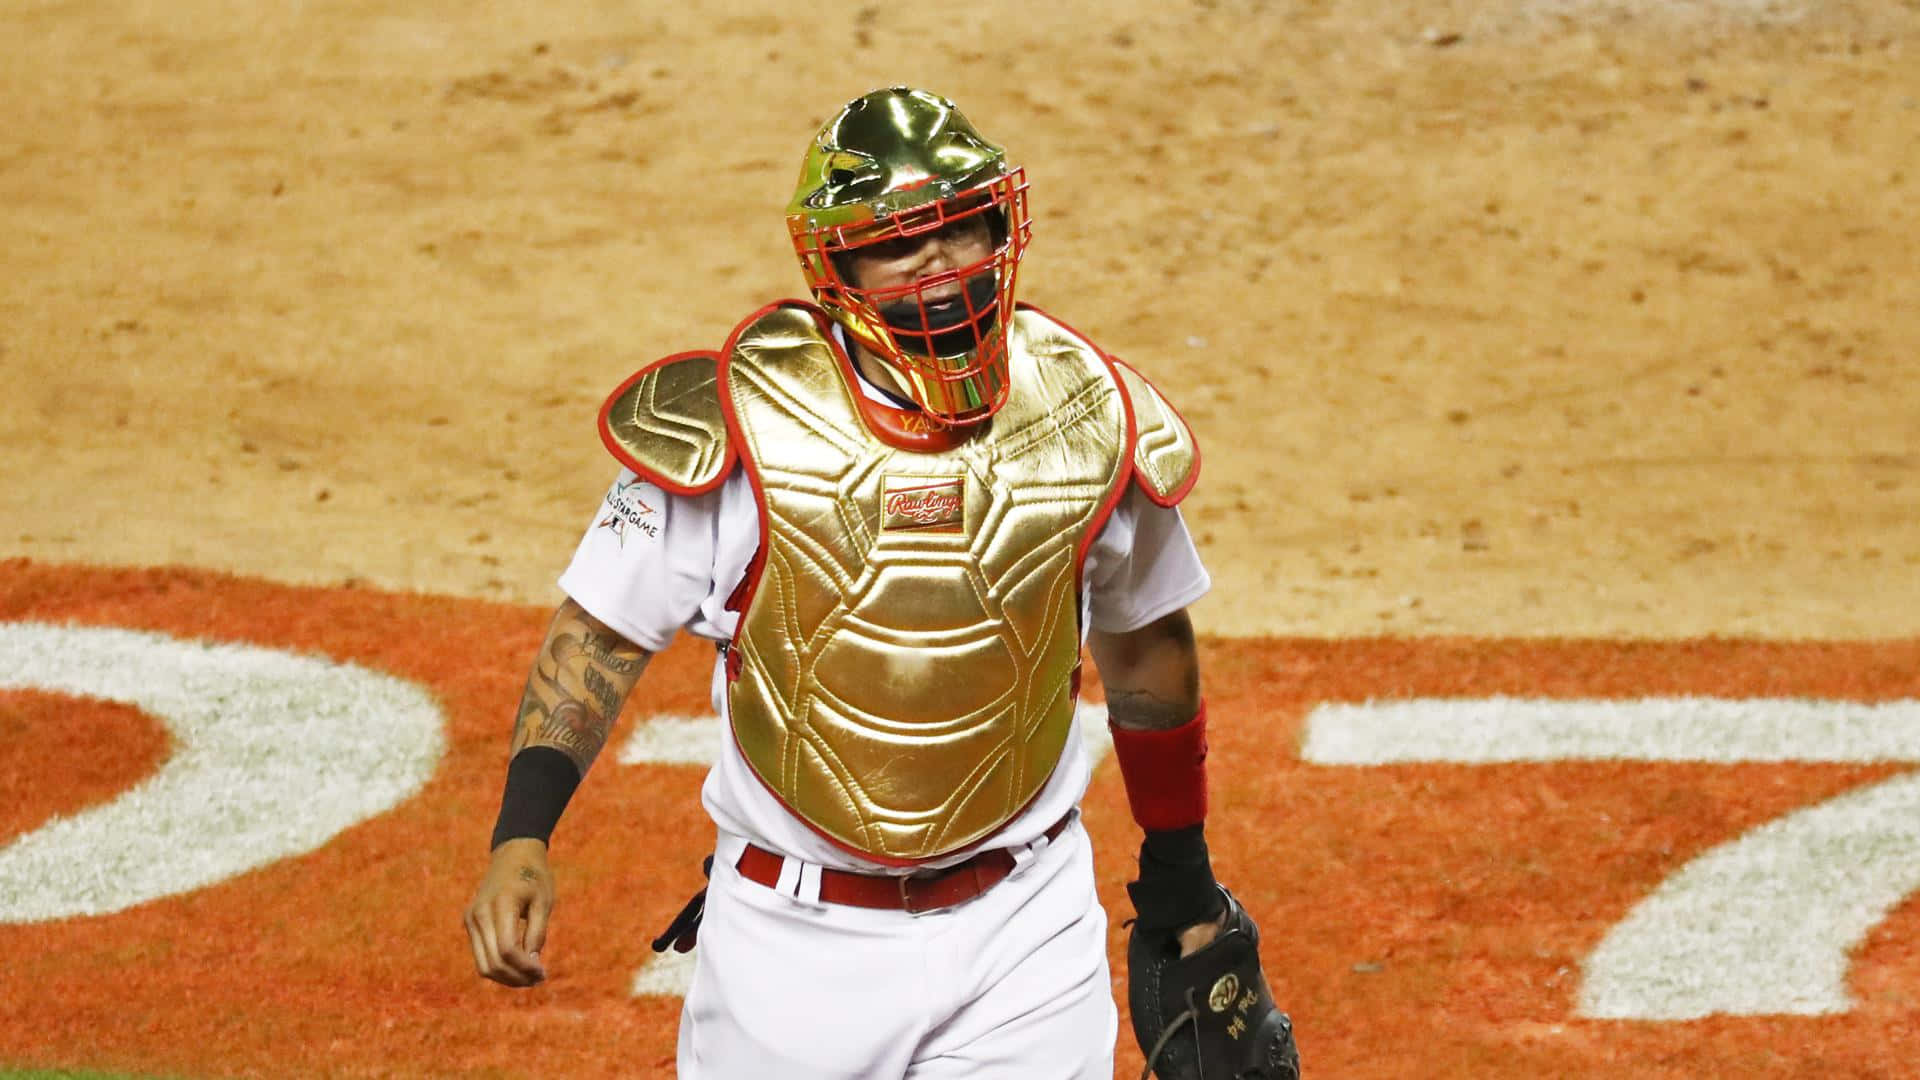 Einbaseballspieler Trägt Eine Goldene Fangmaske. Wallpaper